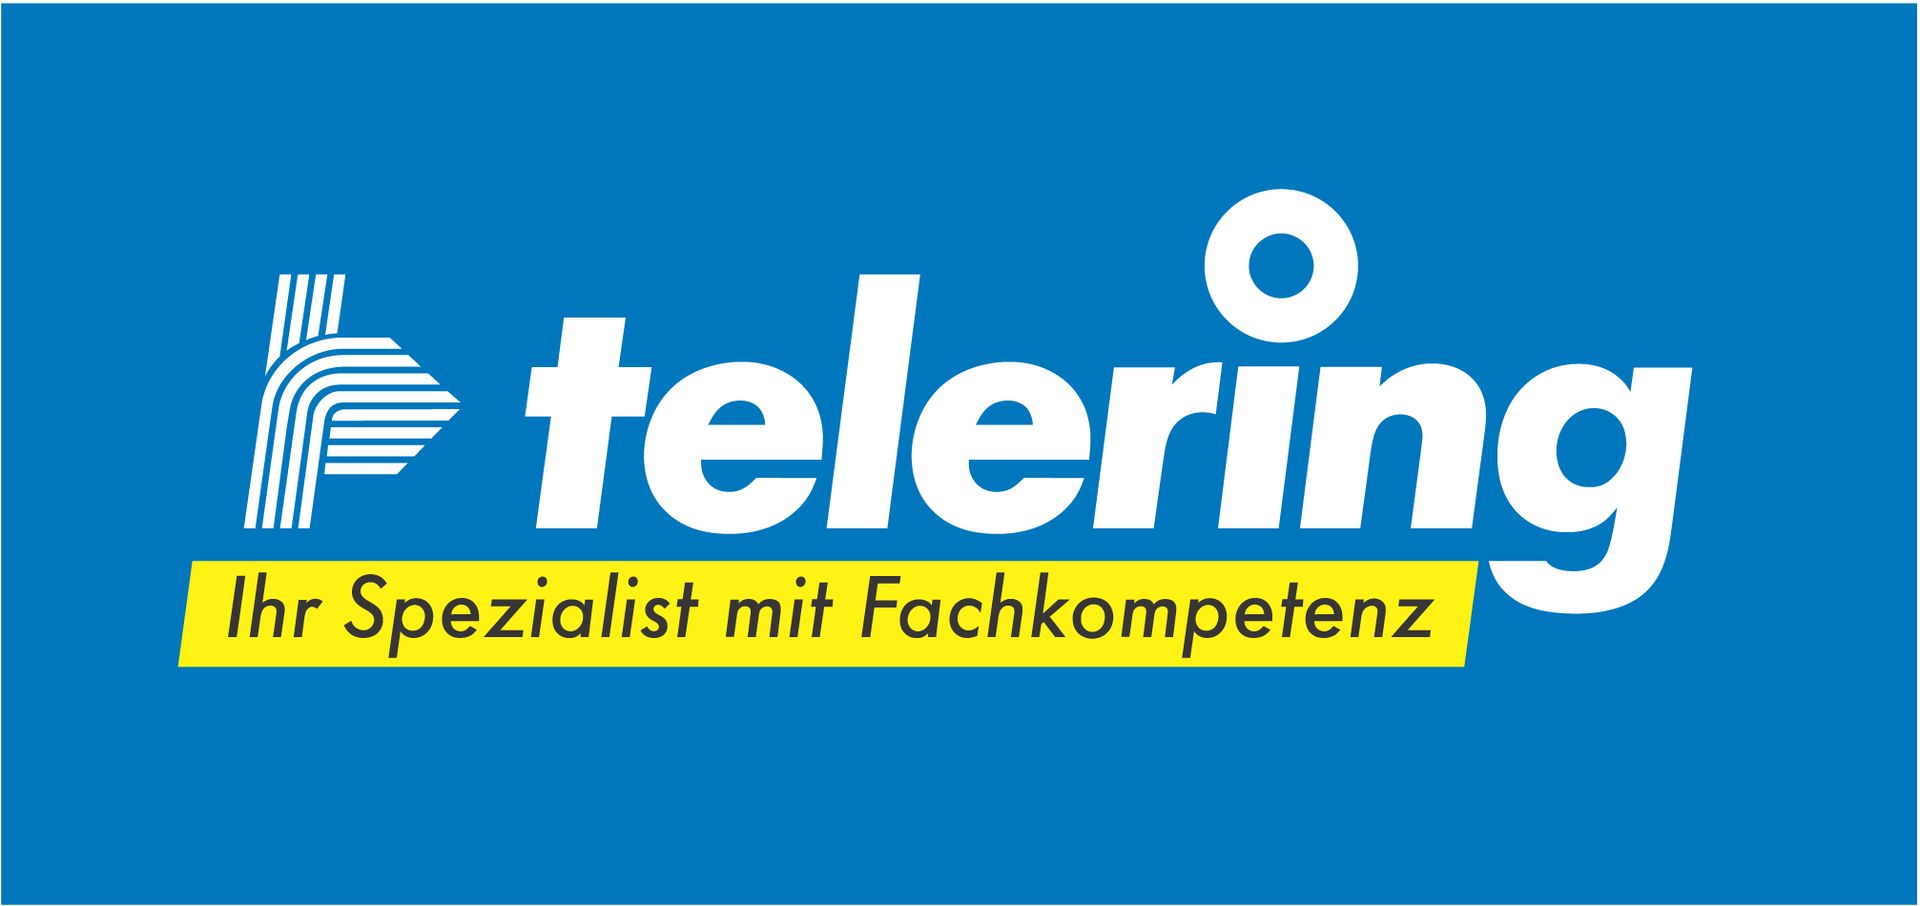 Telering Logo